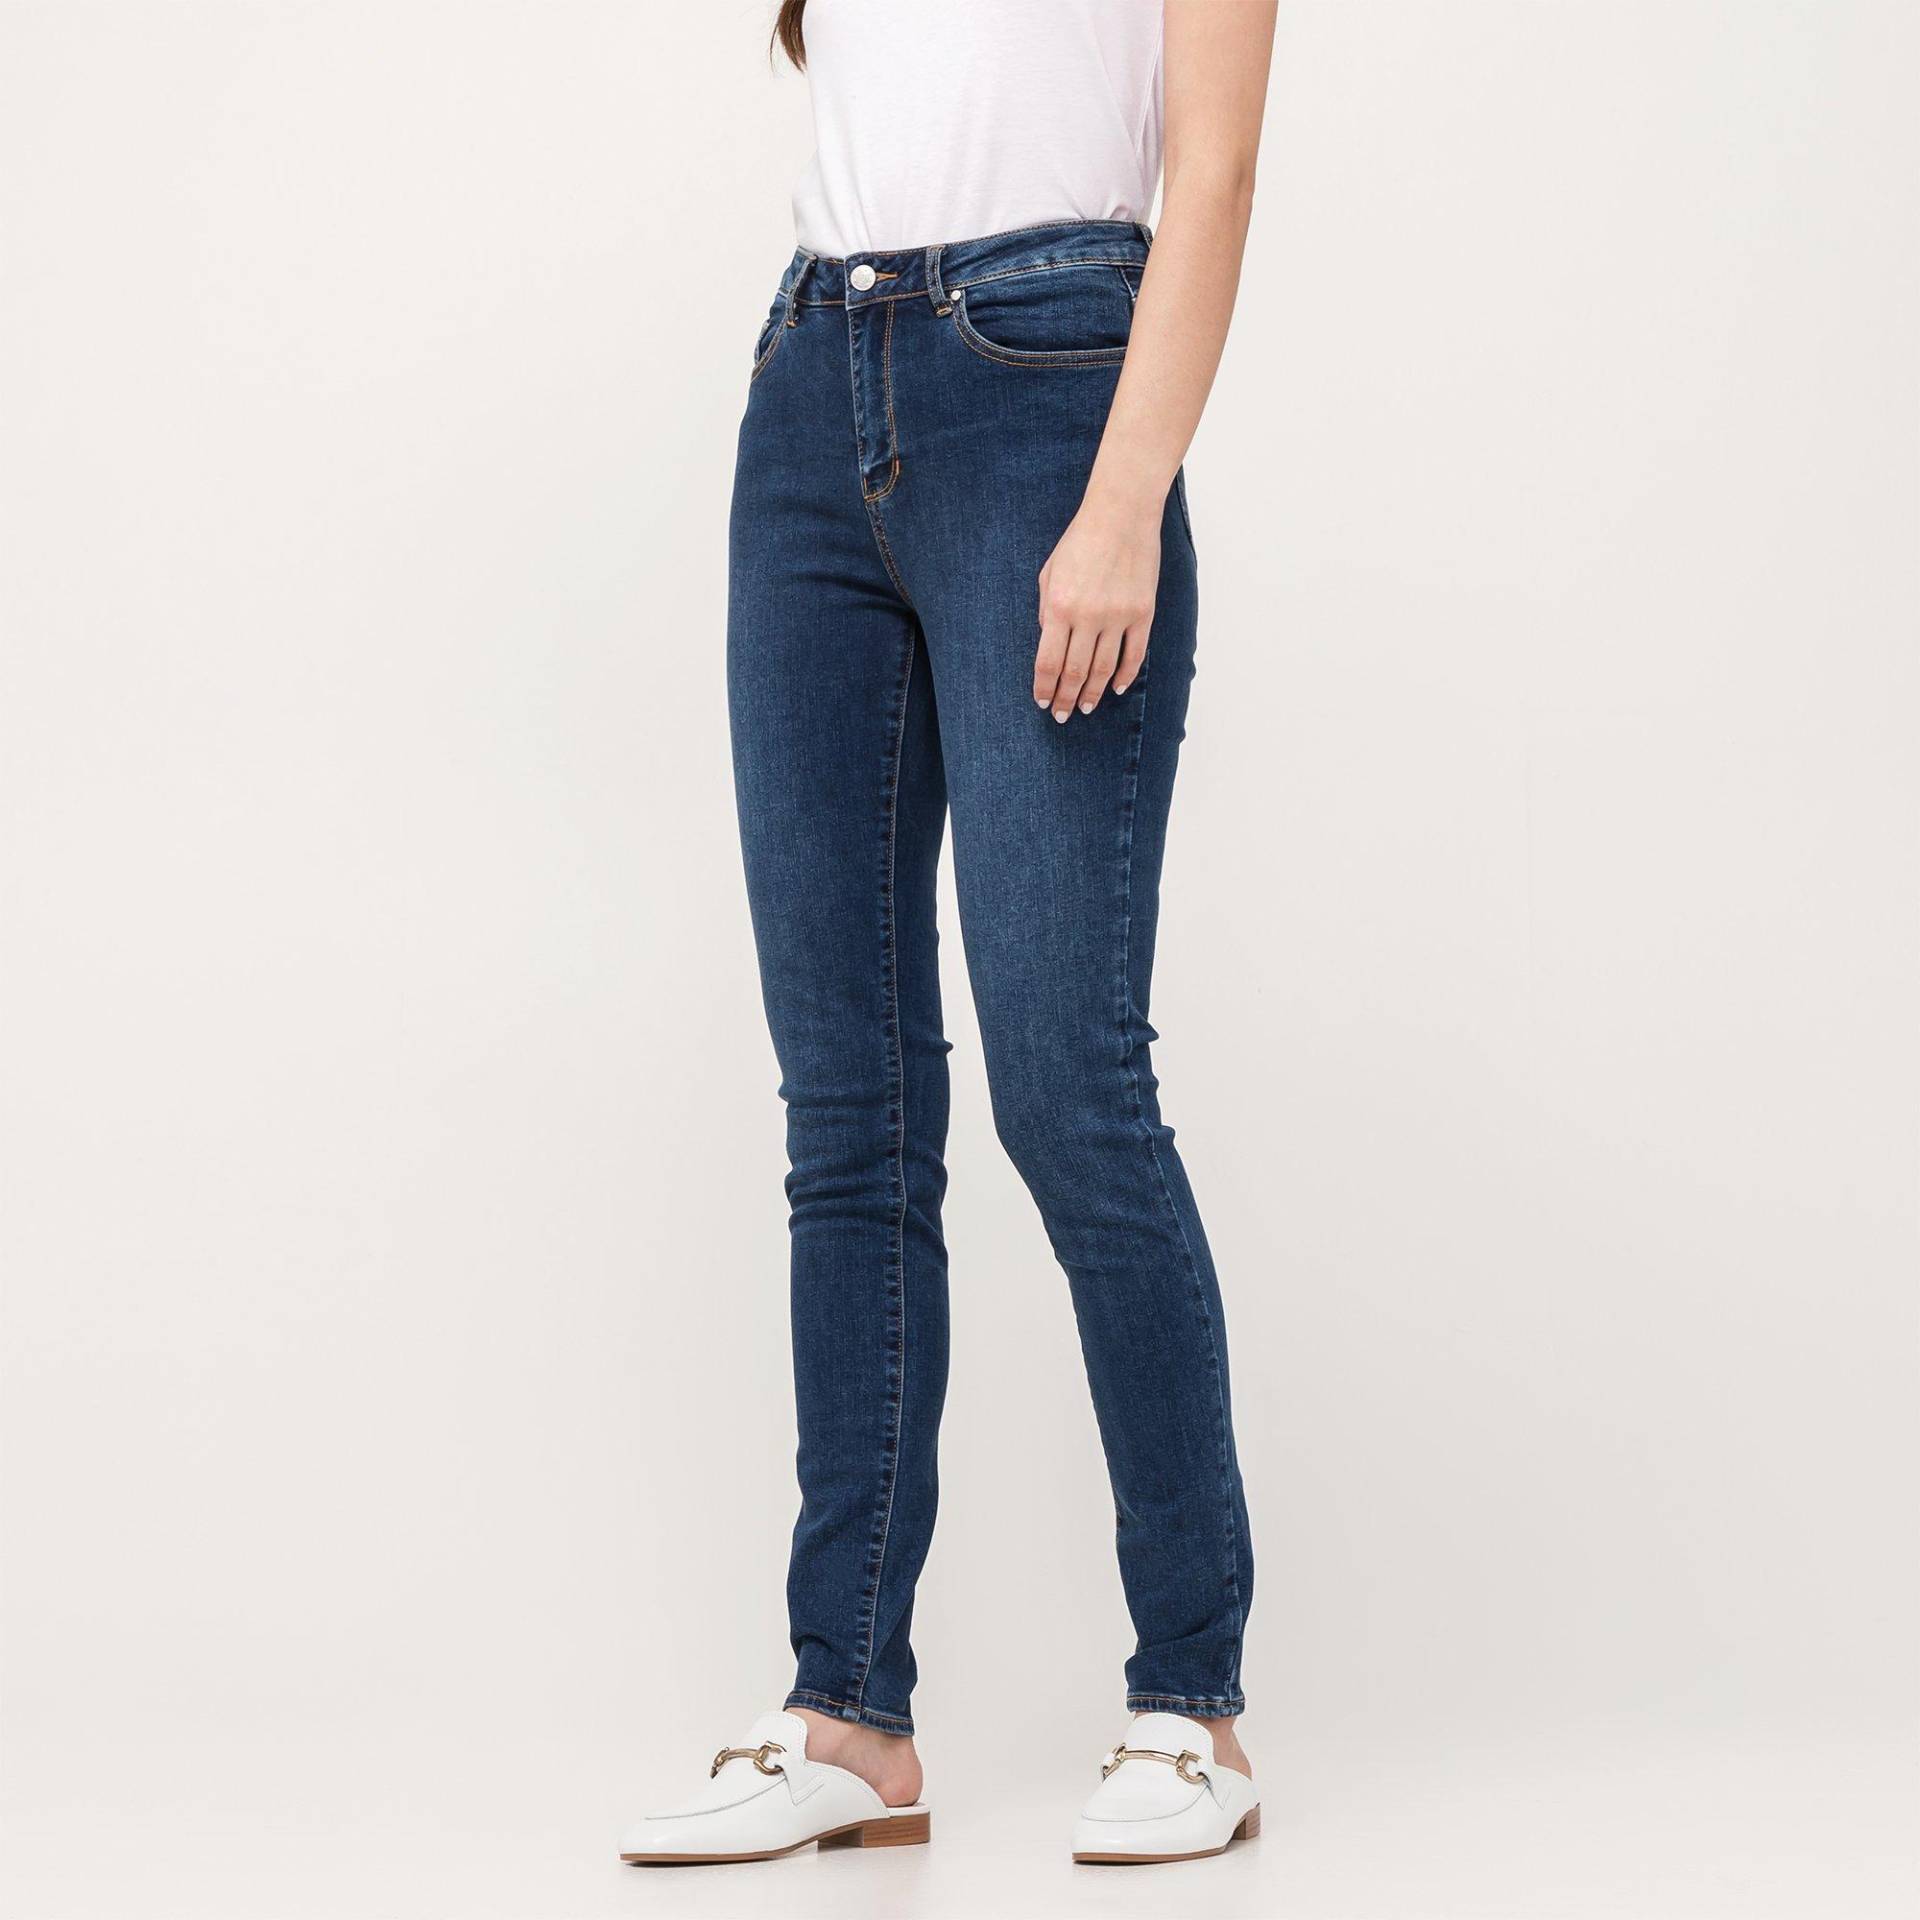 Jeans, Slim Fit Damen Blau Denim L30/W38 von Manor Woman